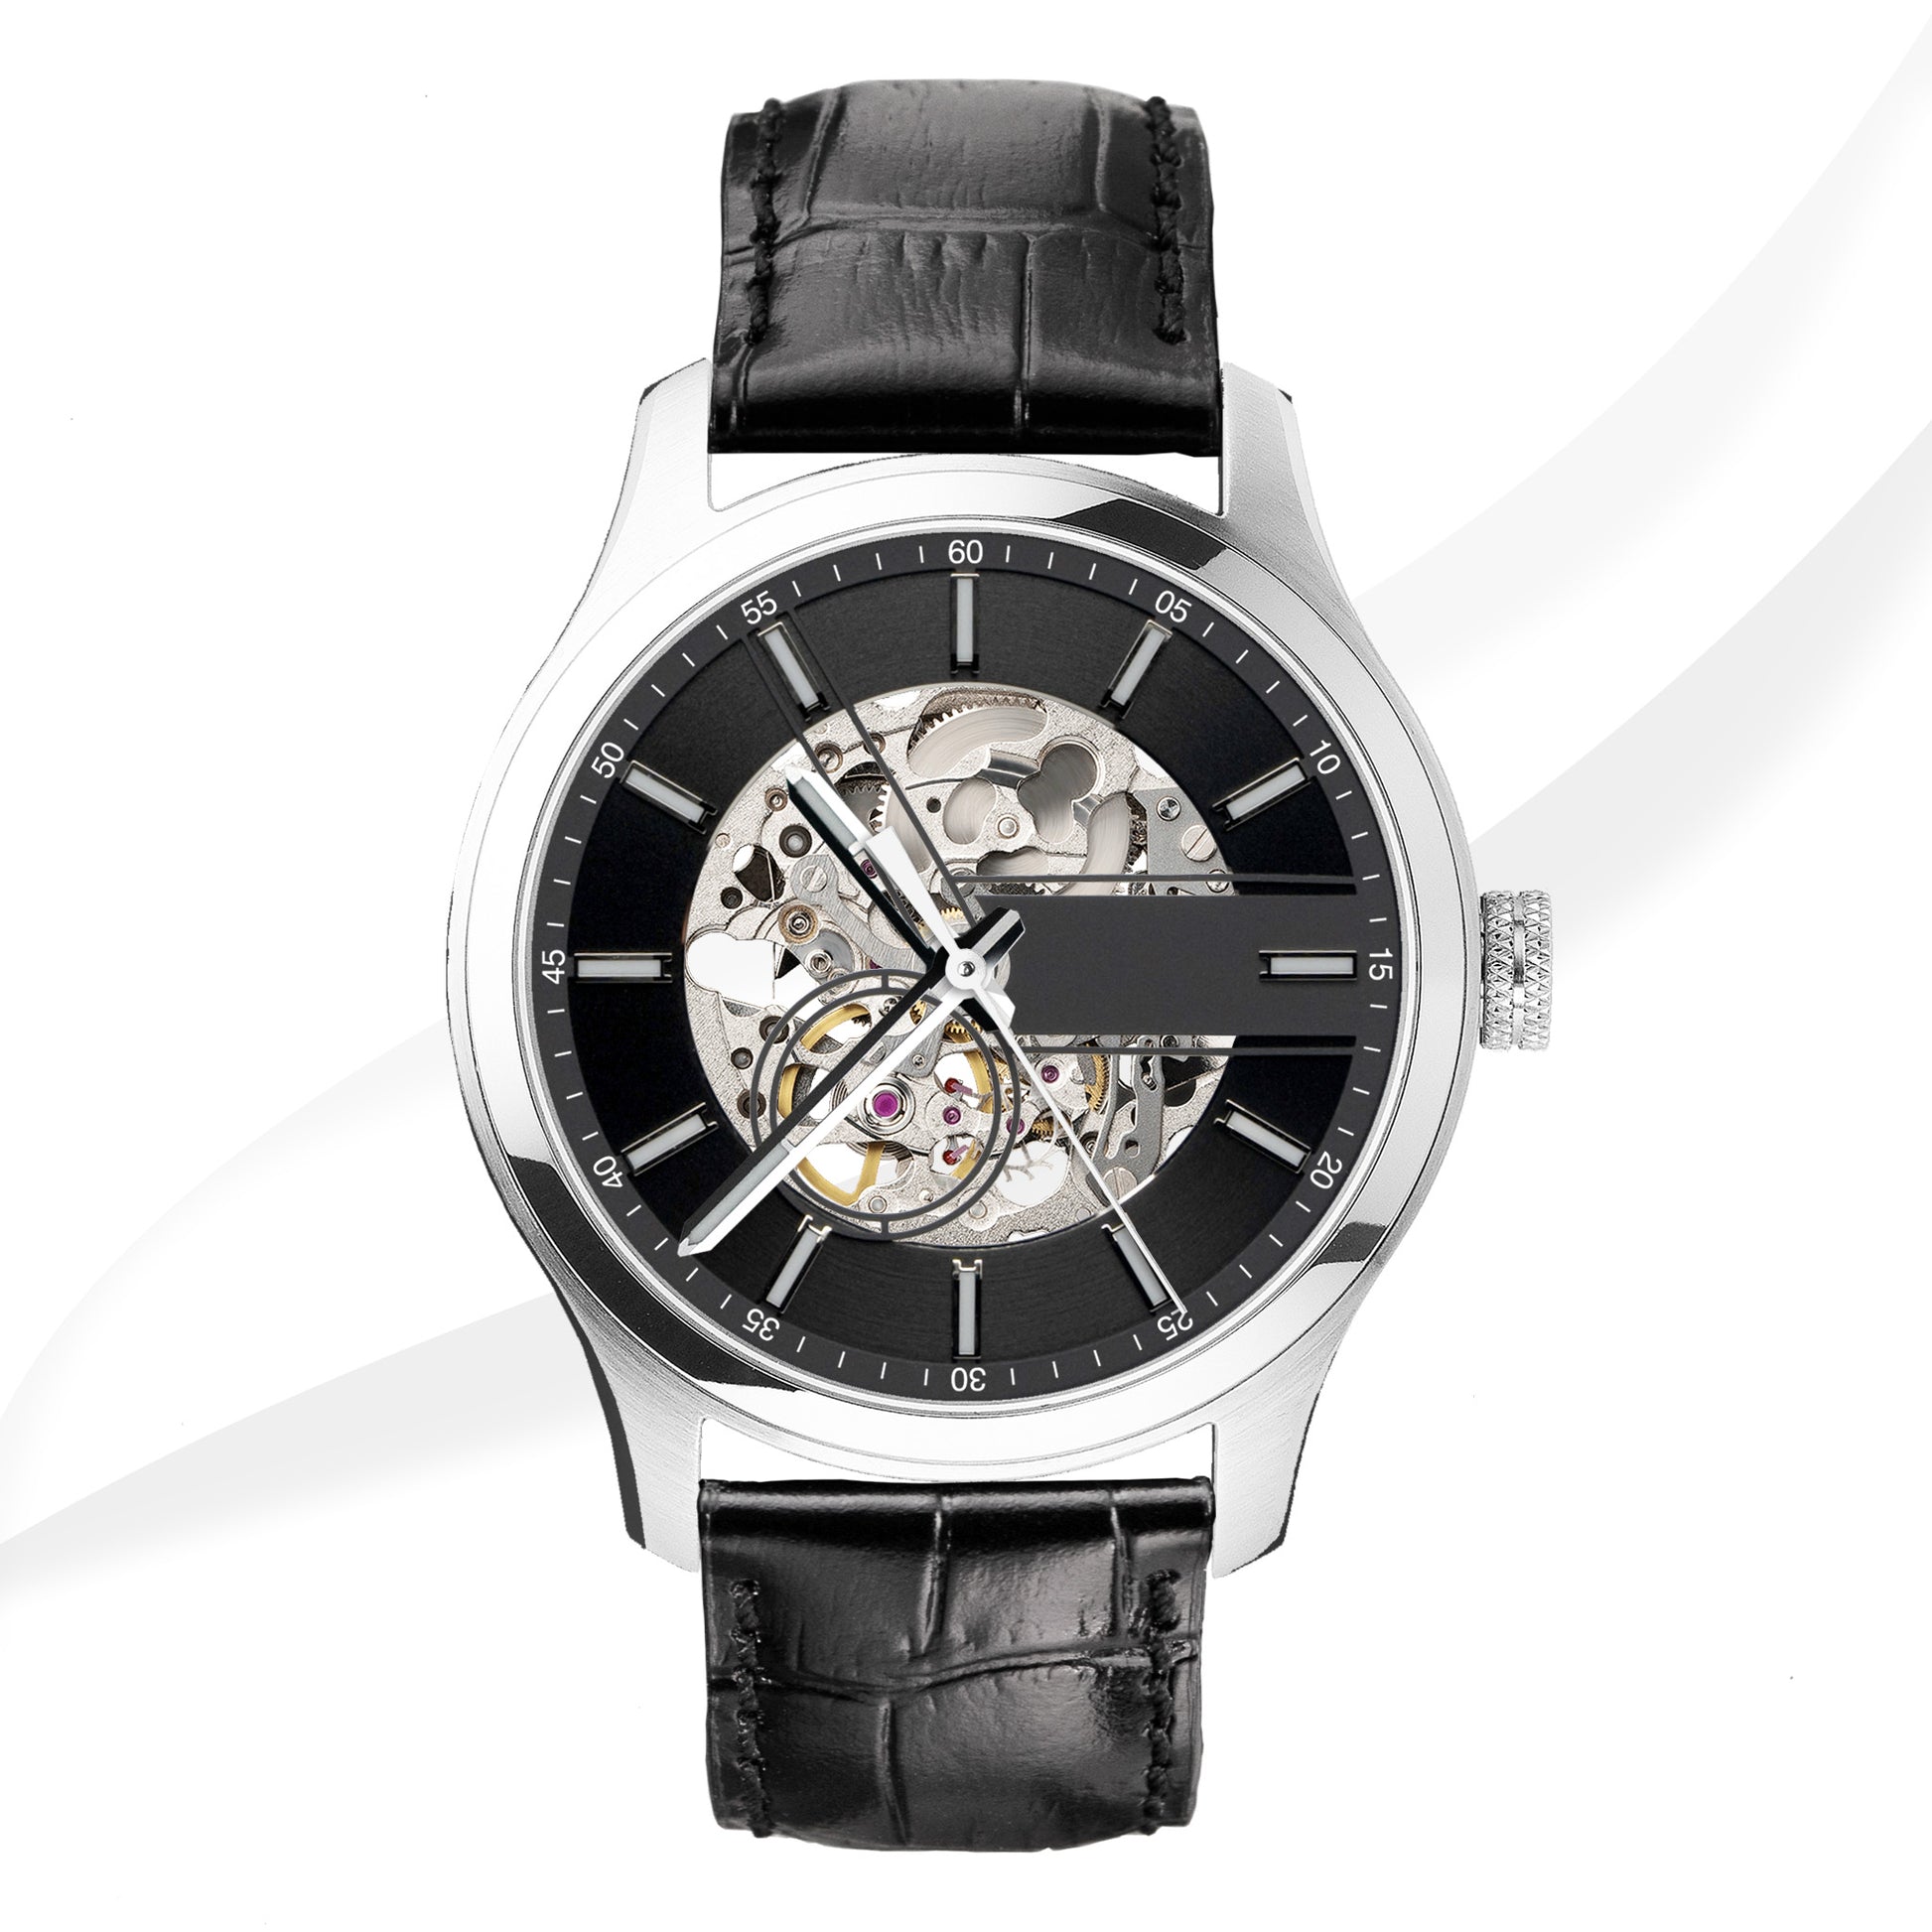 EONIQ - Custom Skeleton watch with black alligator strap 40mm - Navigator s series